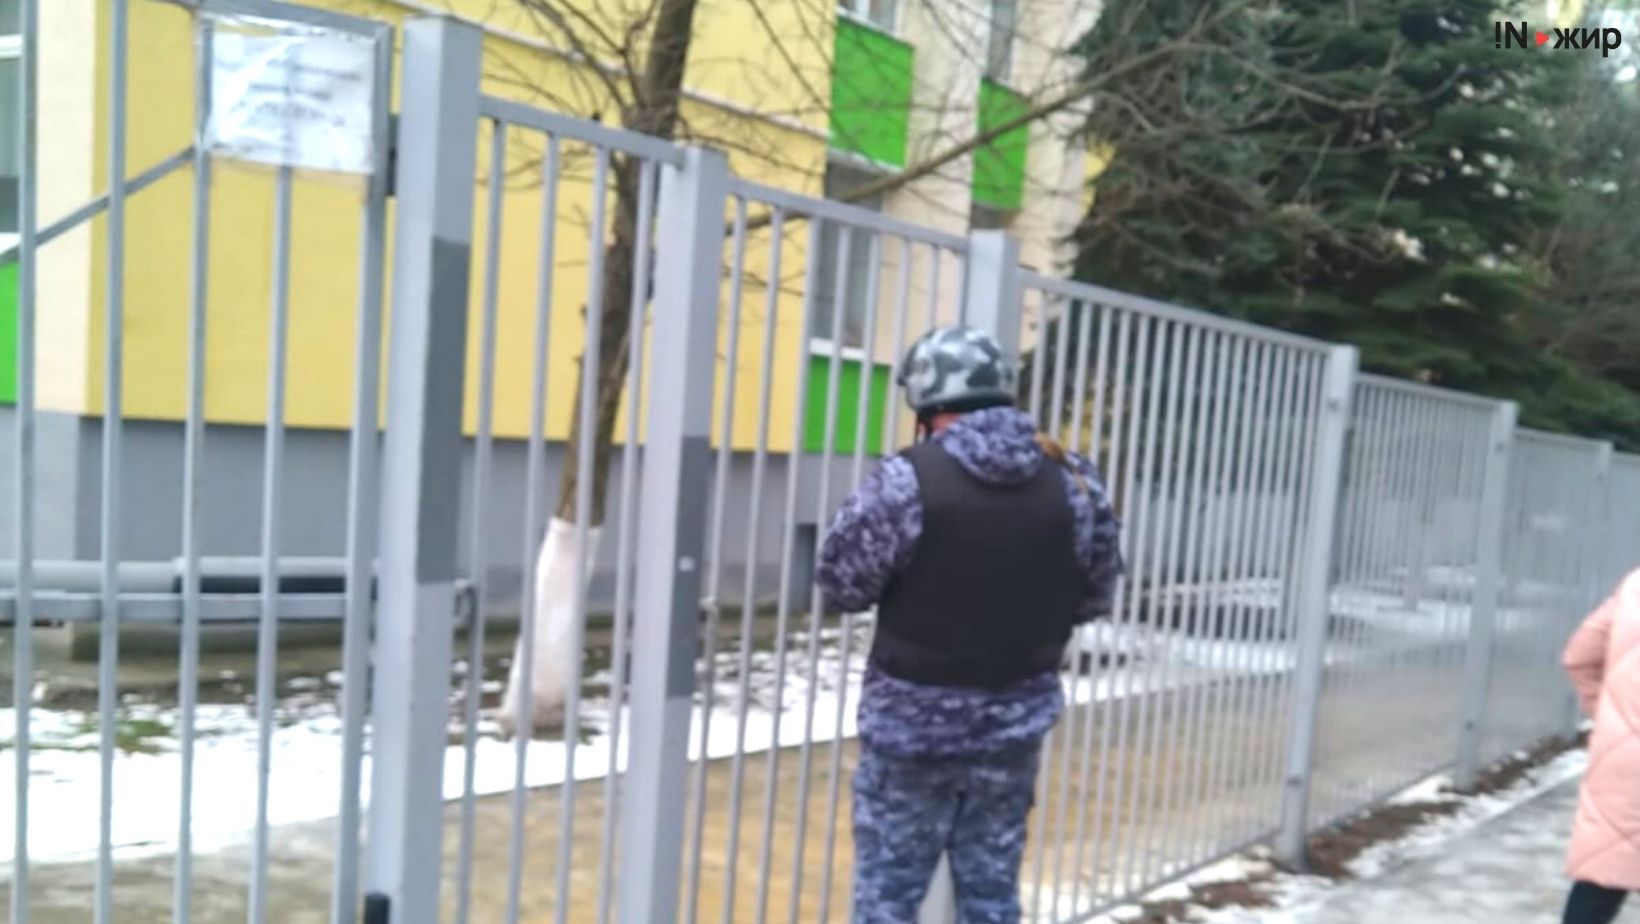 "росгвардеец" с автоматом возле школы.&nbsp;Фото: INжир media